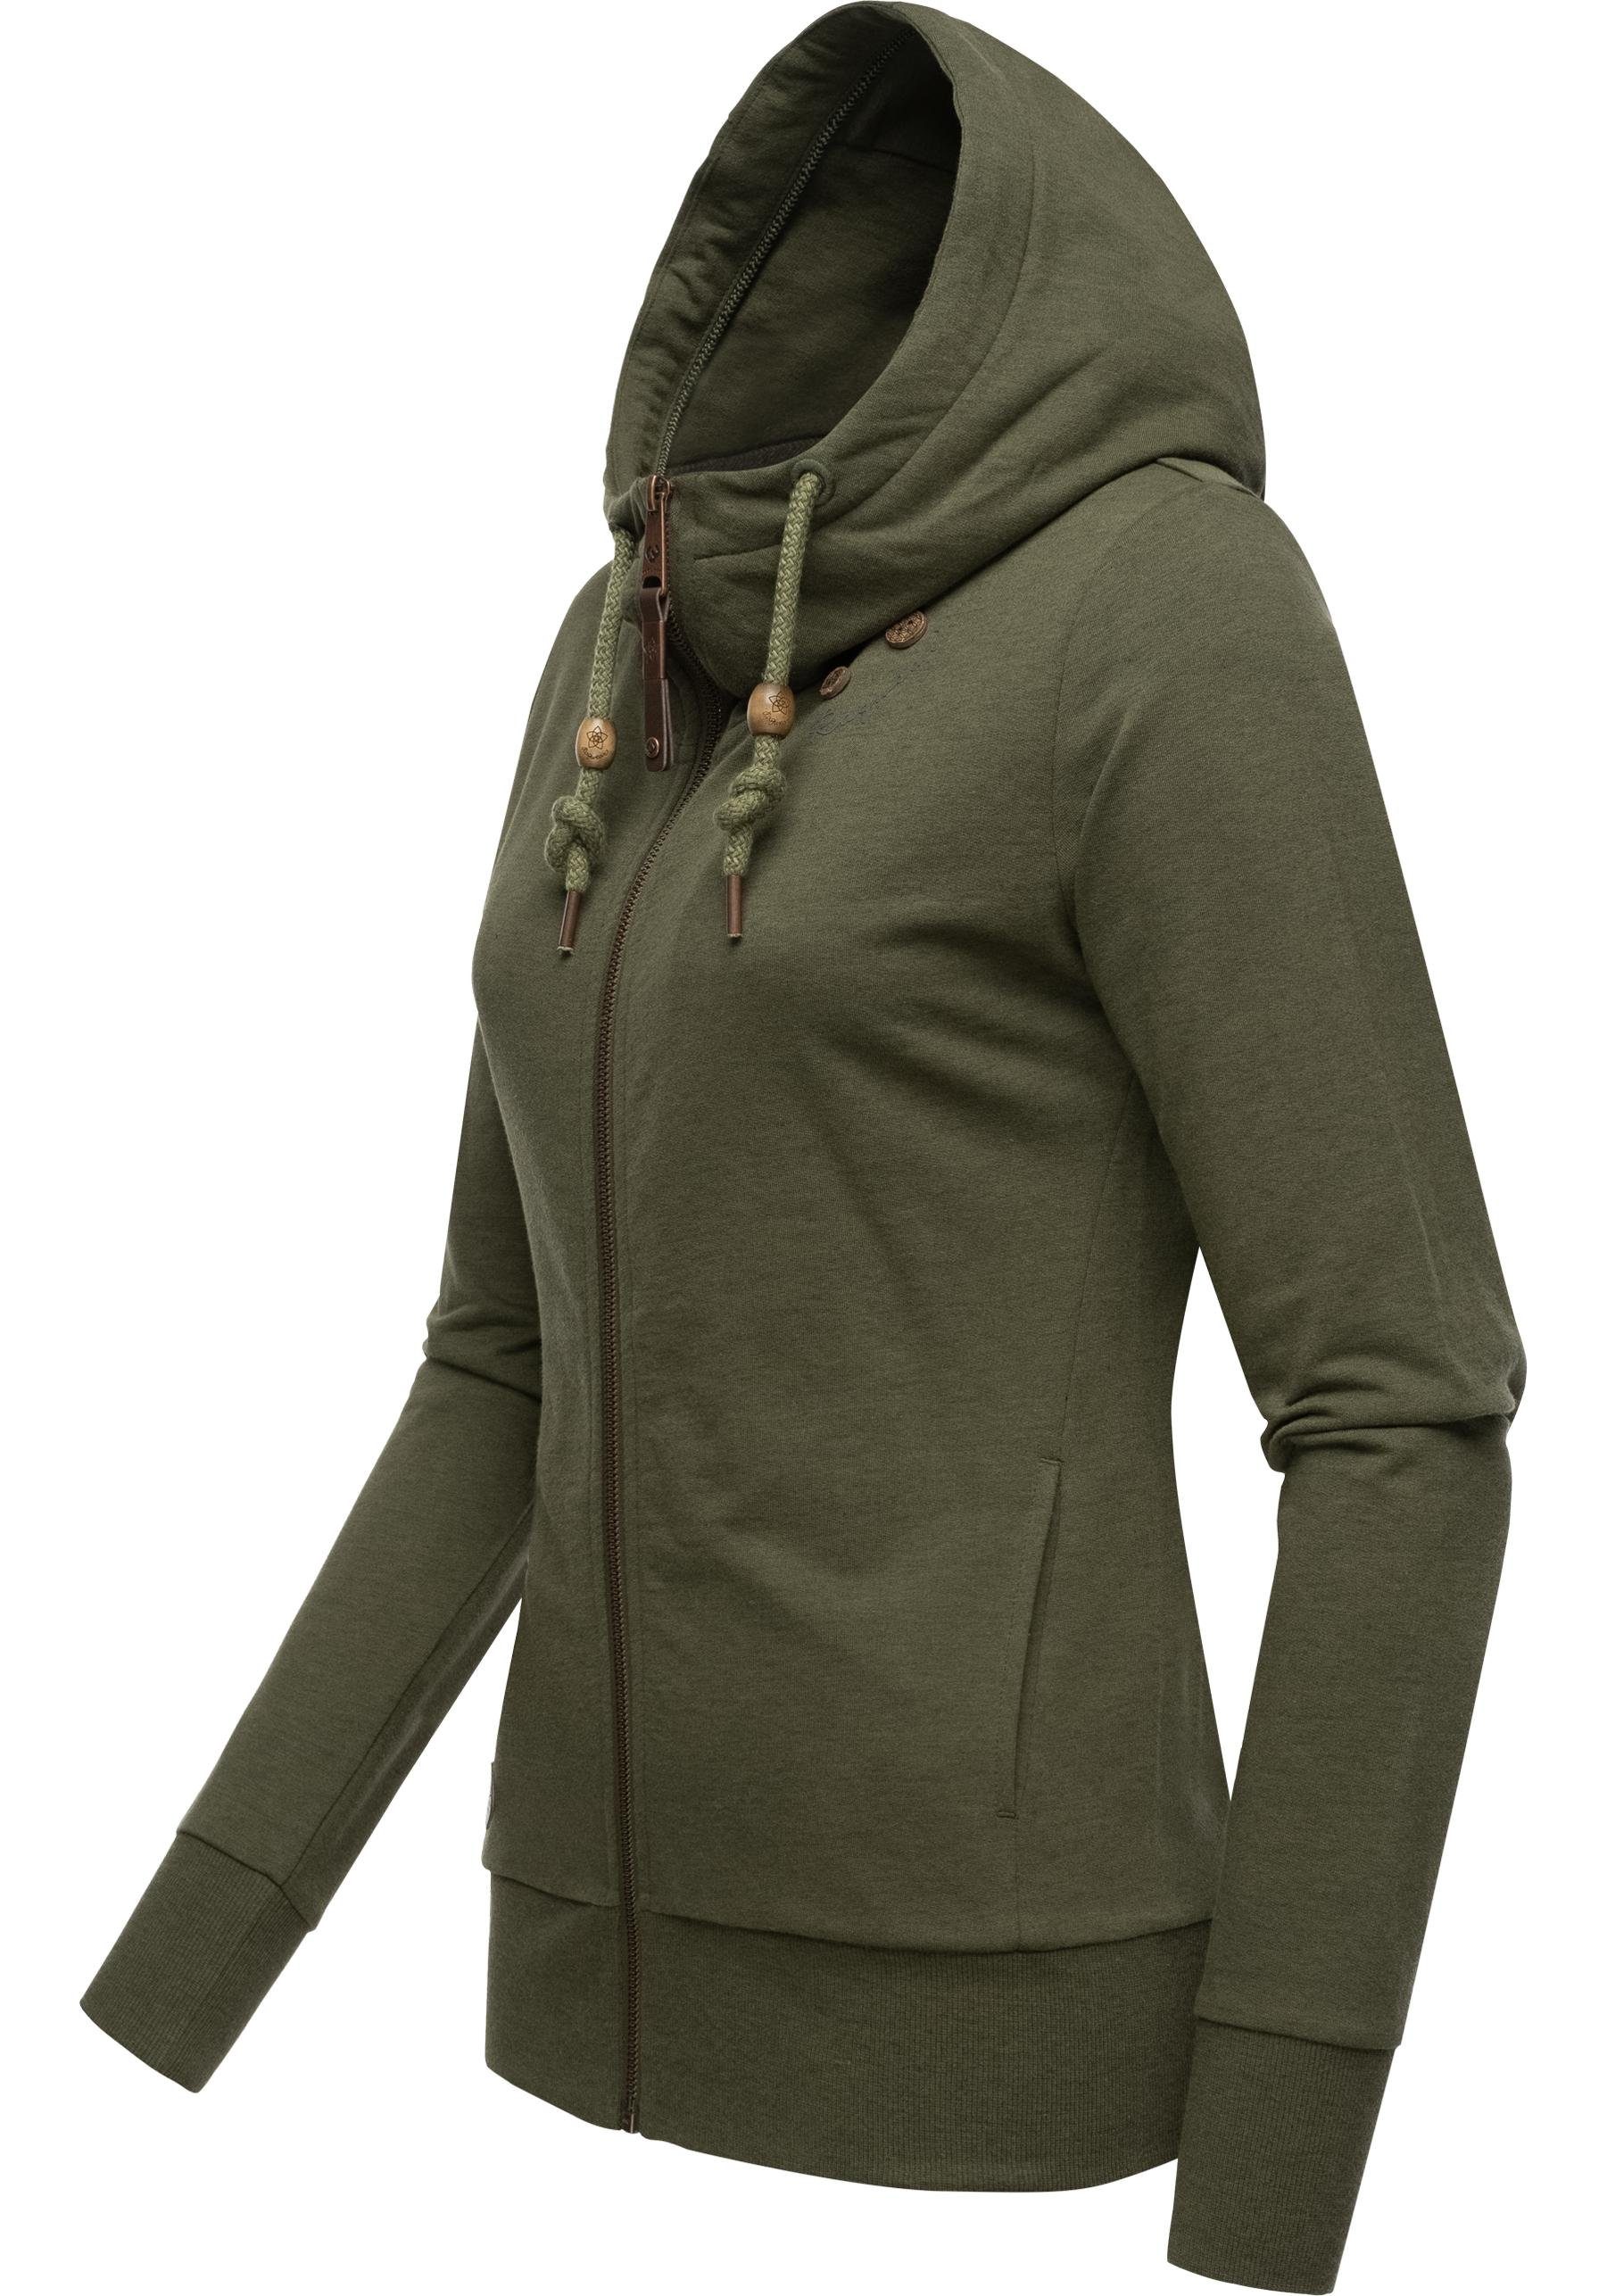 Paya sportlicher Kapuzensweater Ragwear Kordeln mit Damen Kapuzensweatjacke olivgrün Intl.